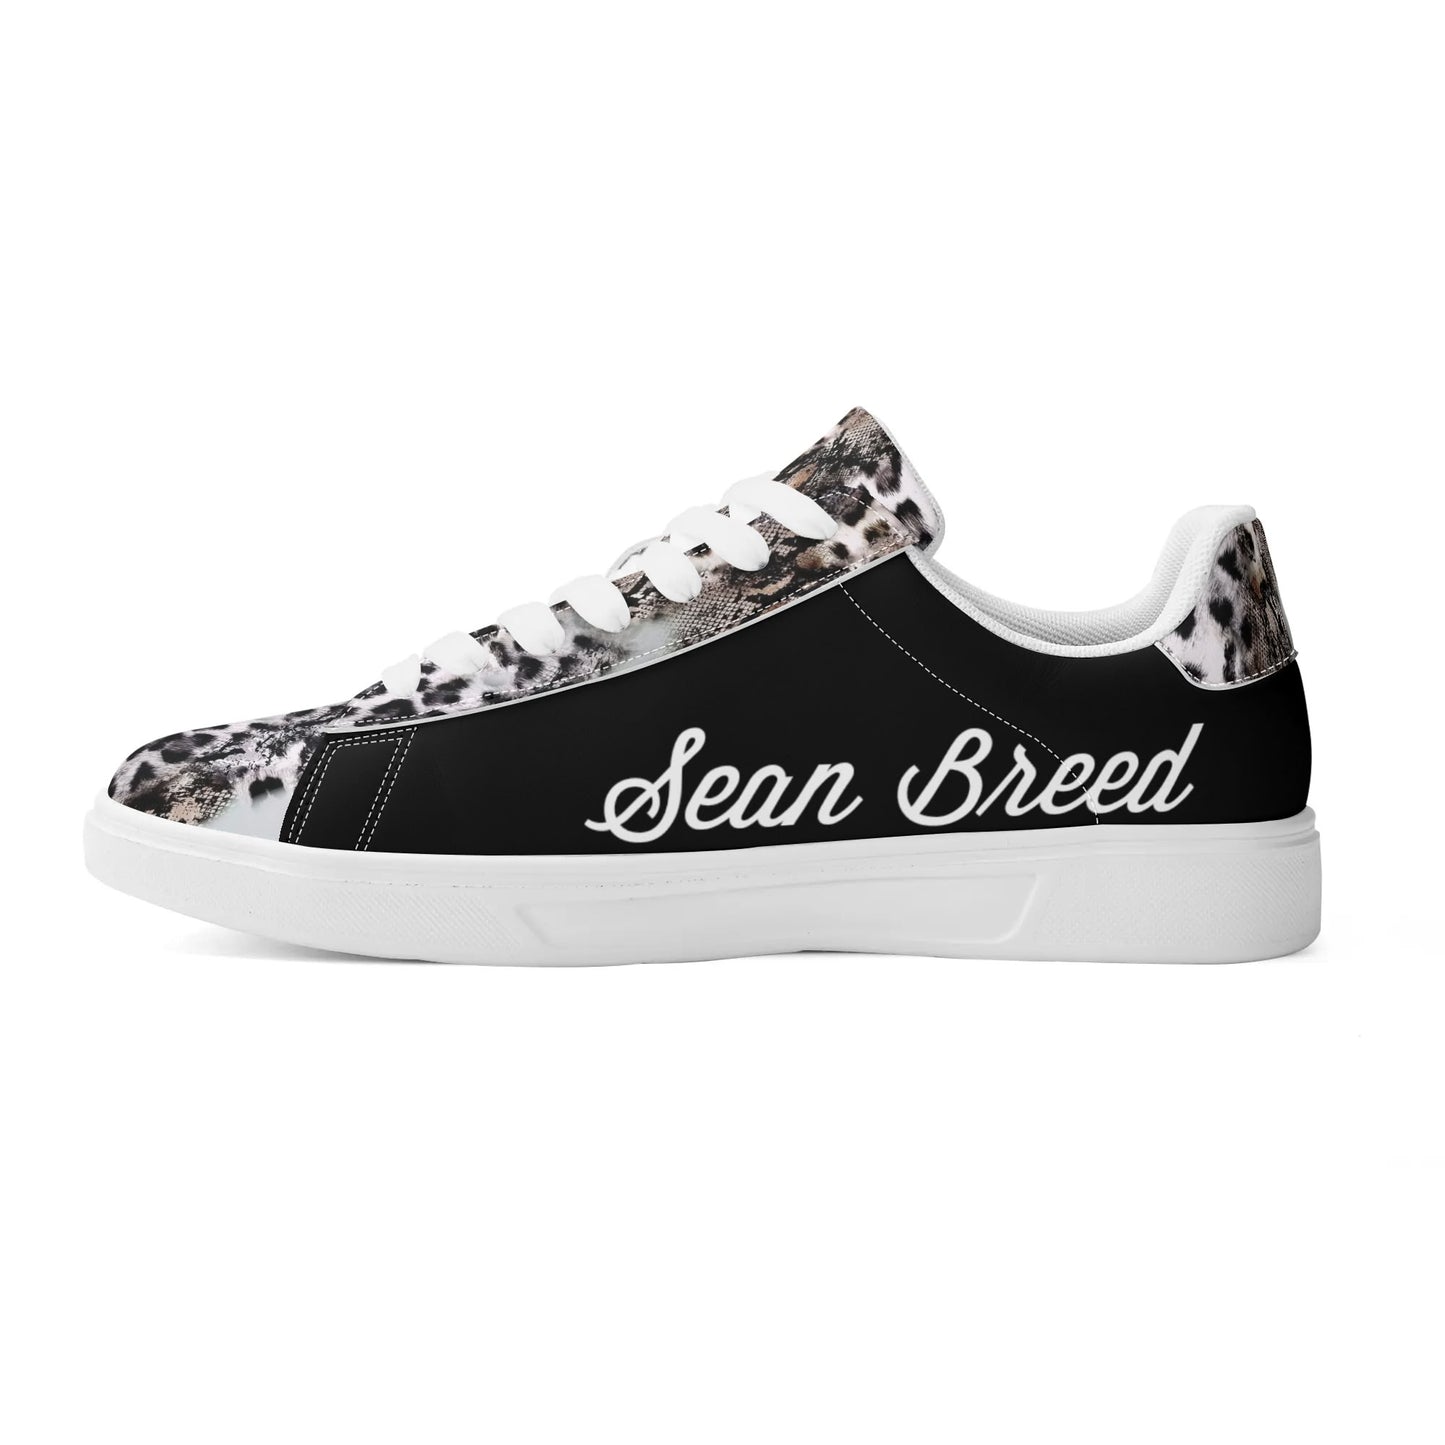 Sean Breed L🖤VE Leopard & Snakeskin Adult Lightweight Low Top Leather Skateboard Shoes